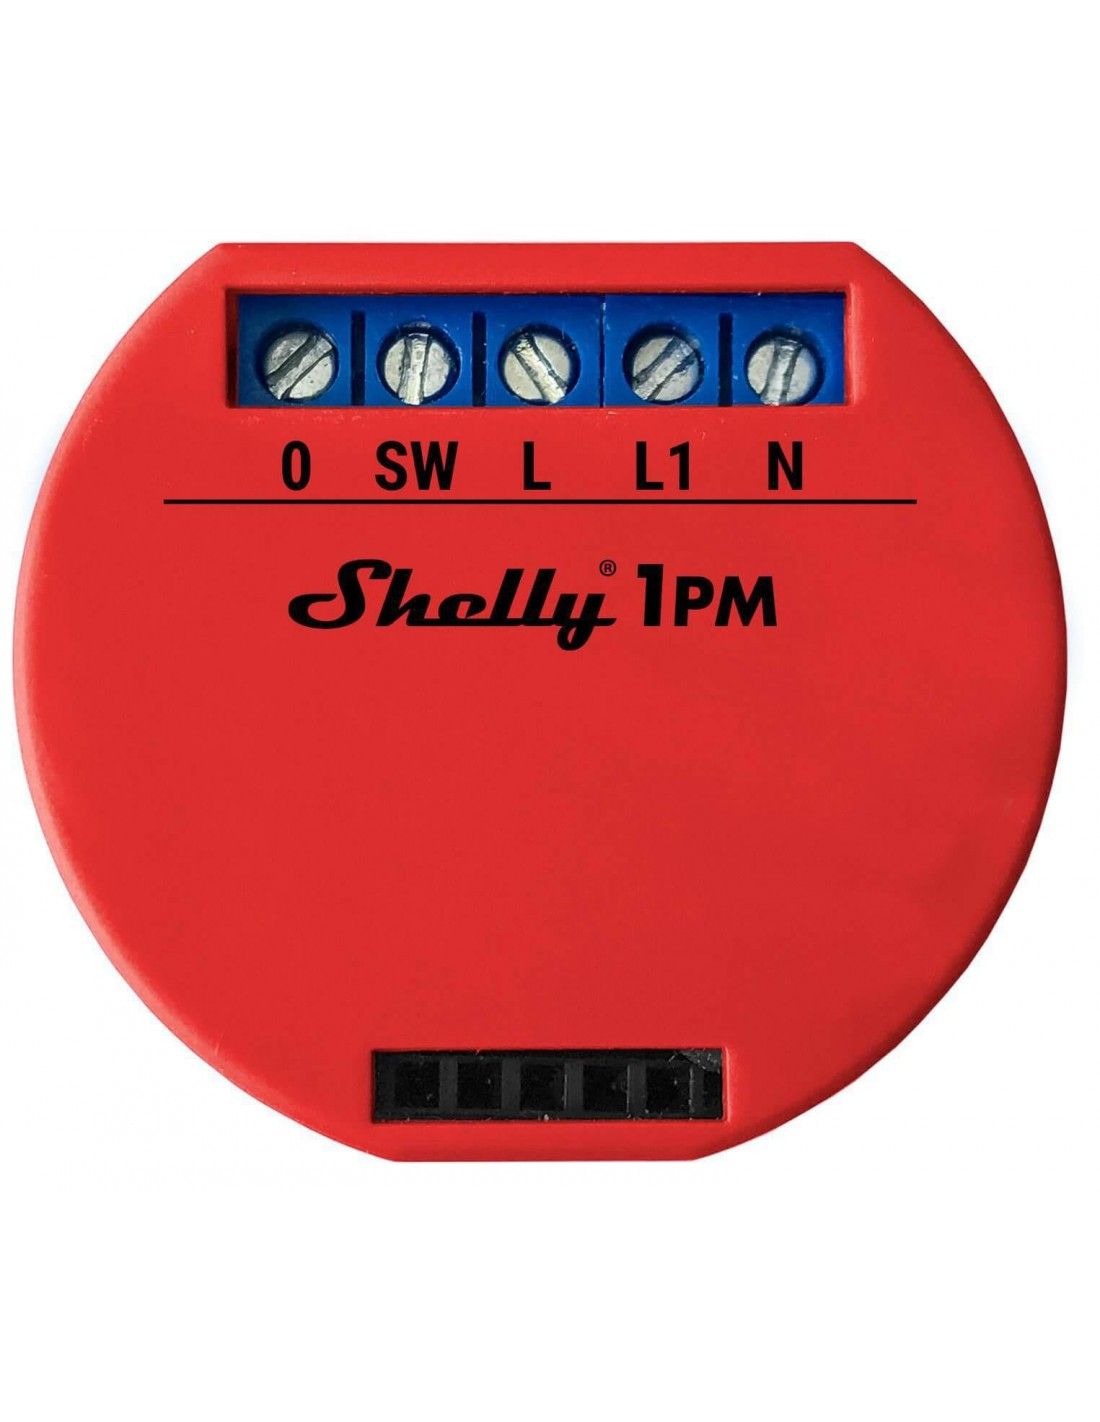 Shelly 1PM Help? : r/shellycloud